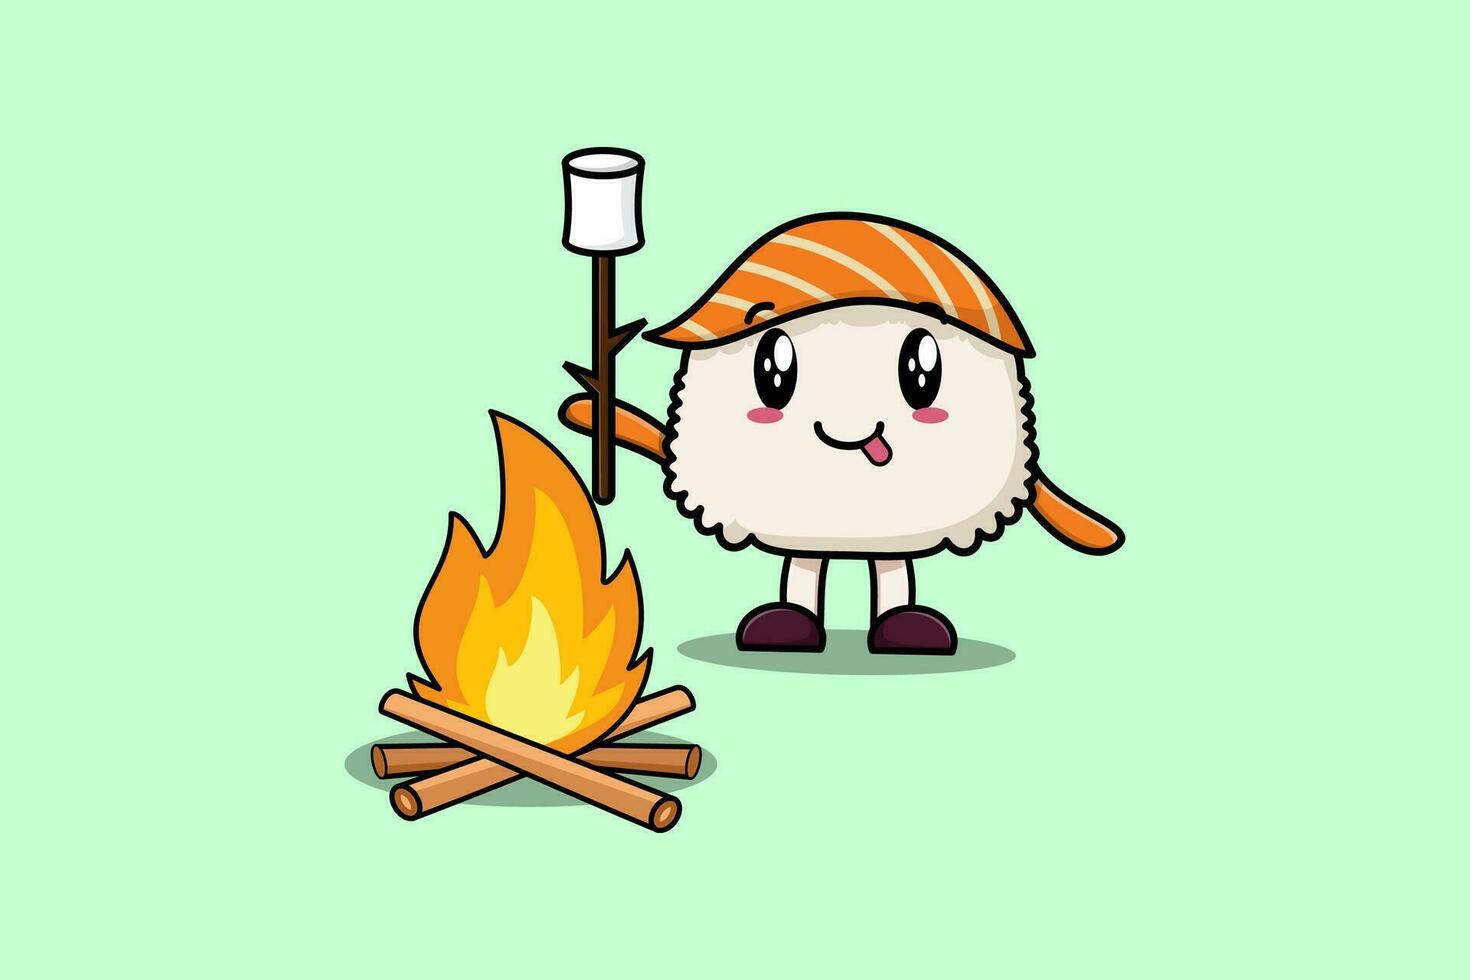 Cute cartoon sushi character burning marshmallow vector